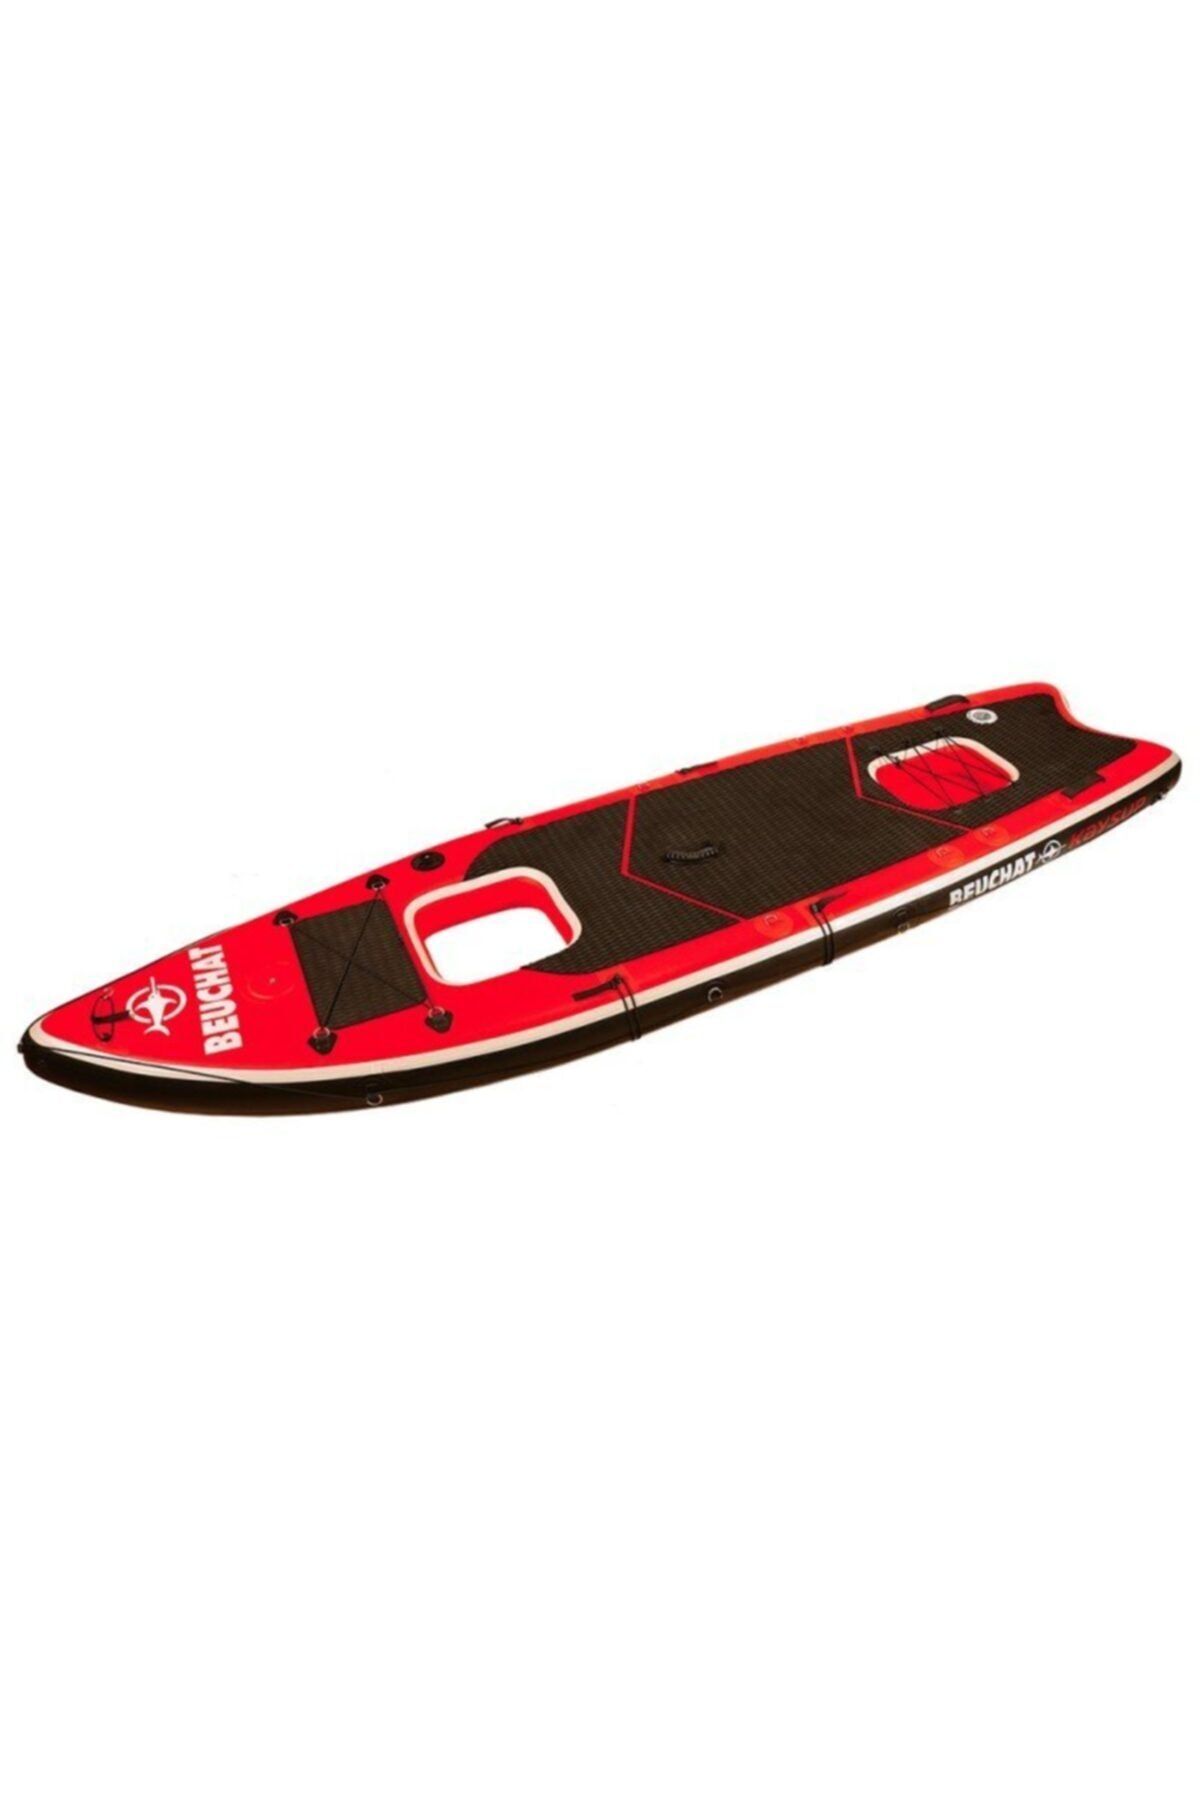 Beuchat Şişme Board Kaysub Set Sub Şişme Kürek Sörfü